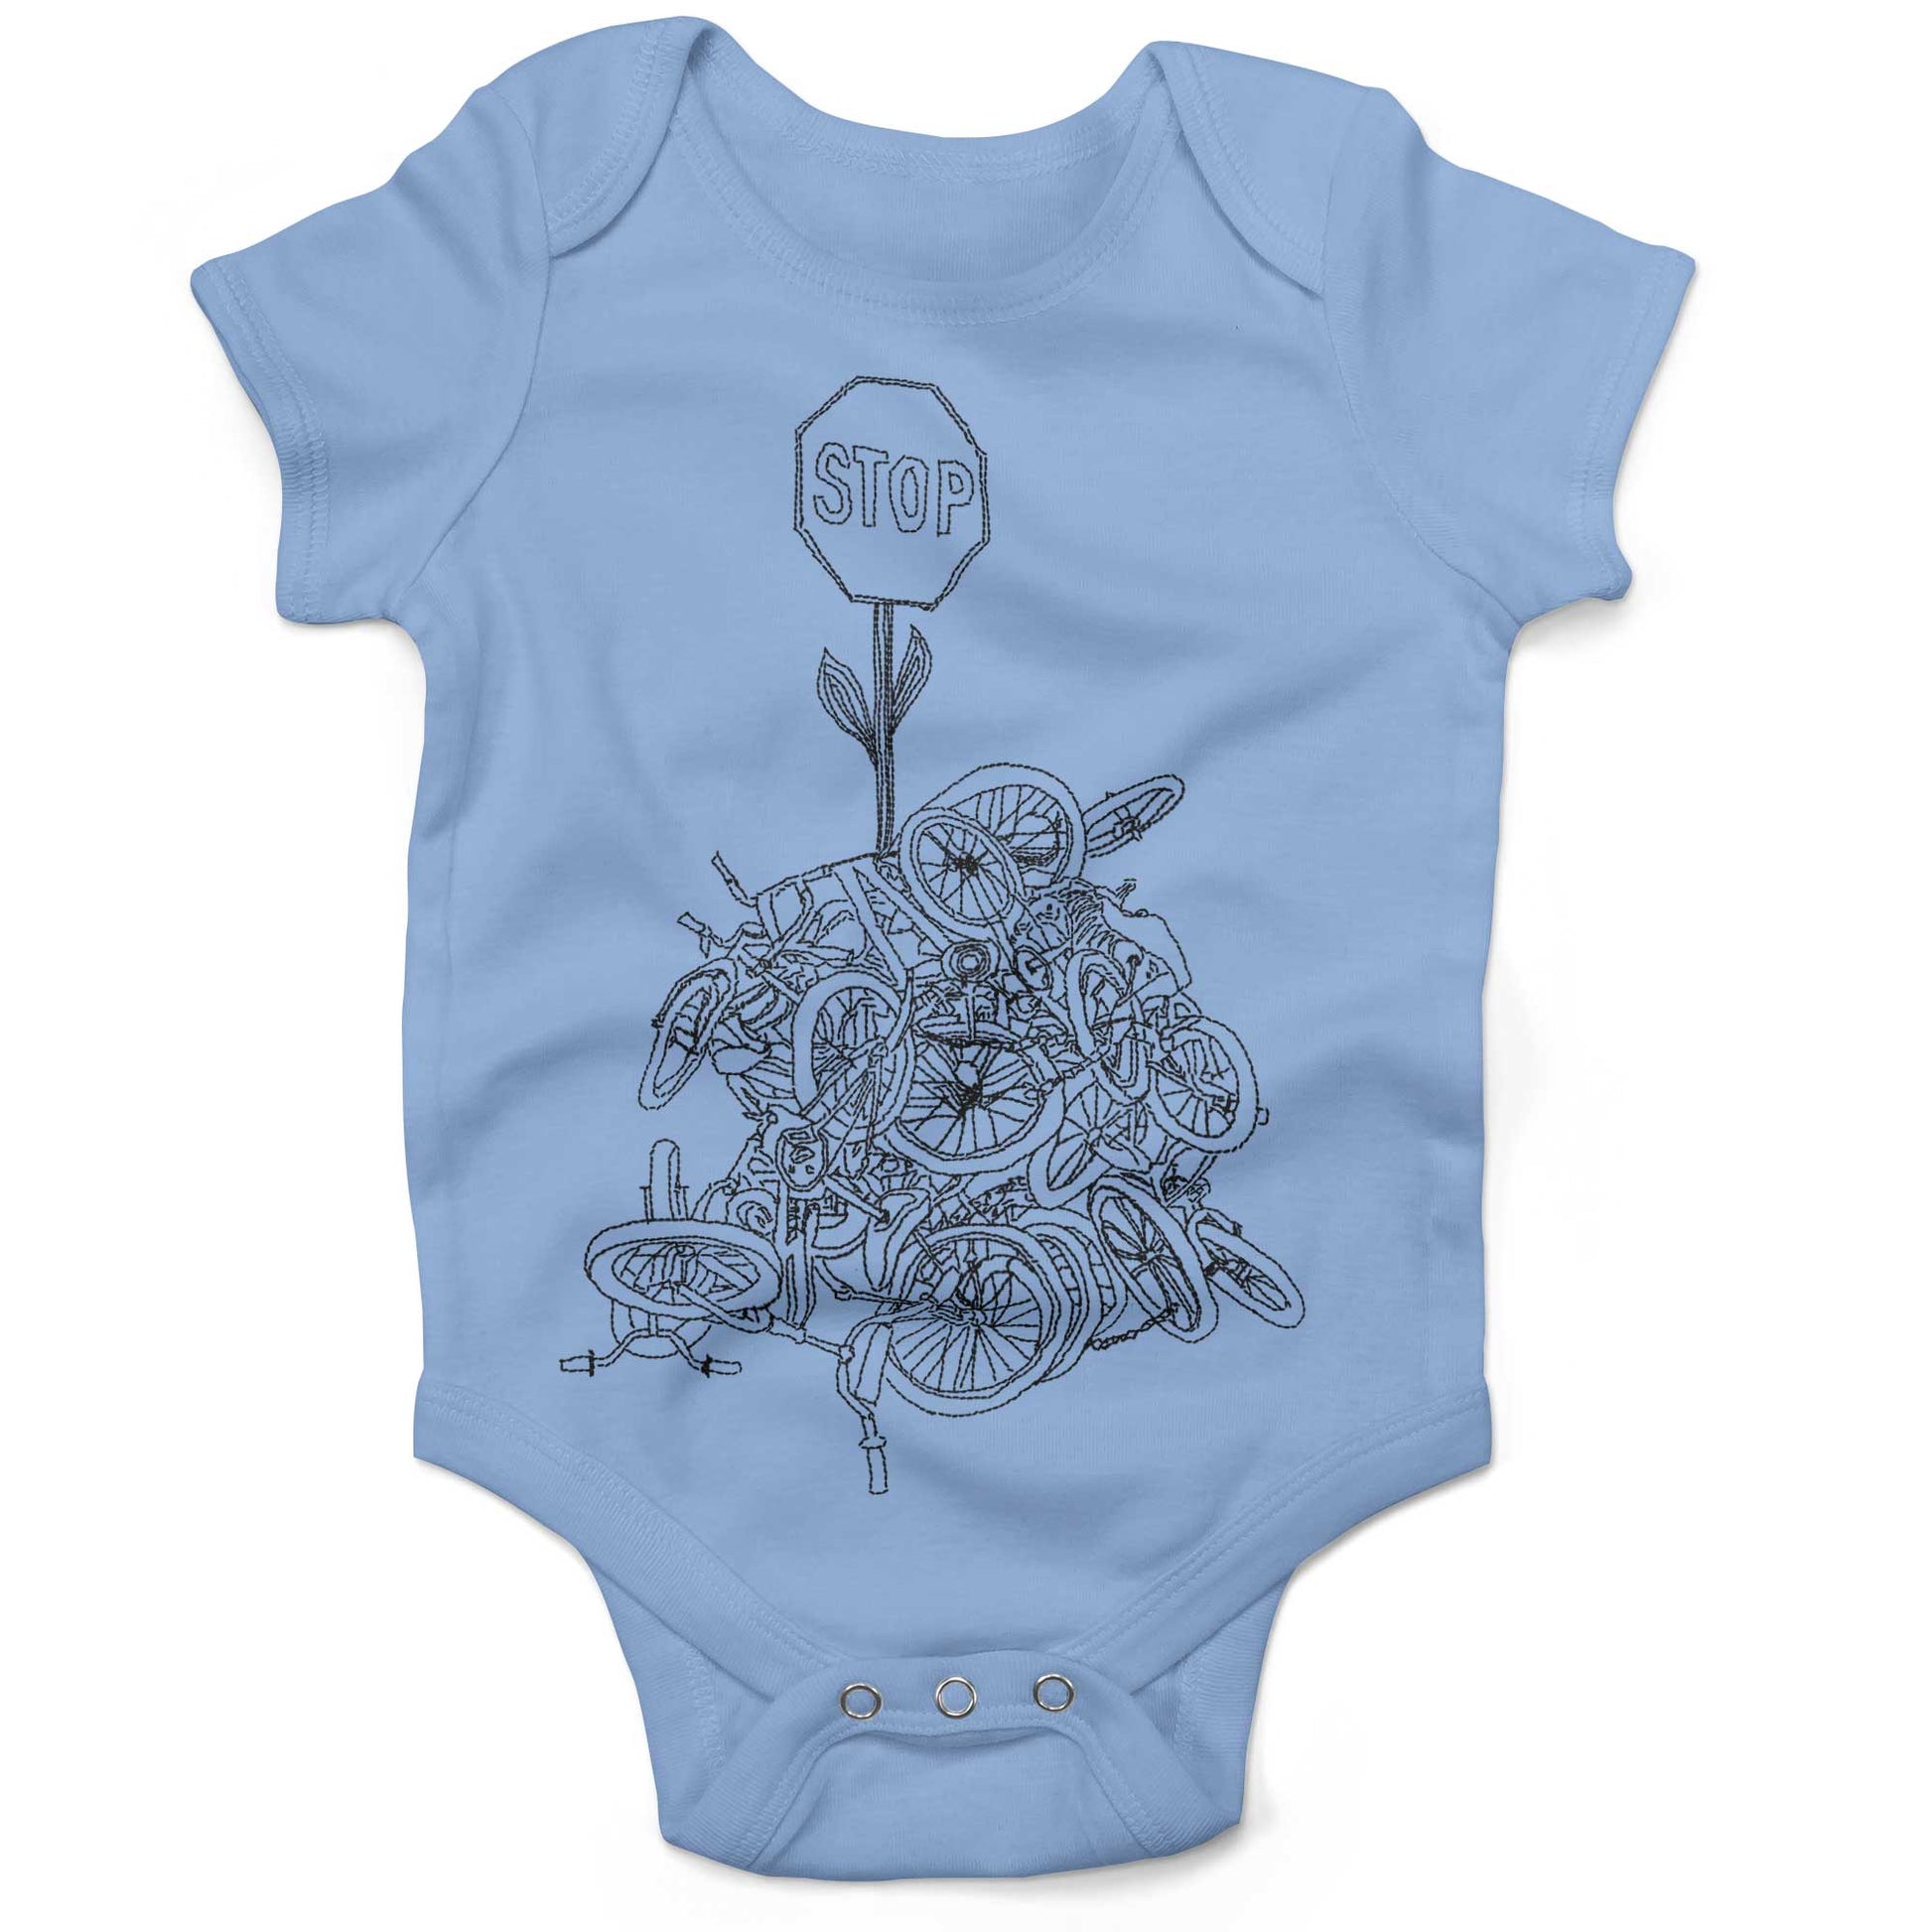 Zoobomber Bike Pyle Infant Bodysuit or Raglan Baby Tee-Organic Baby Blue-3-6 months